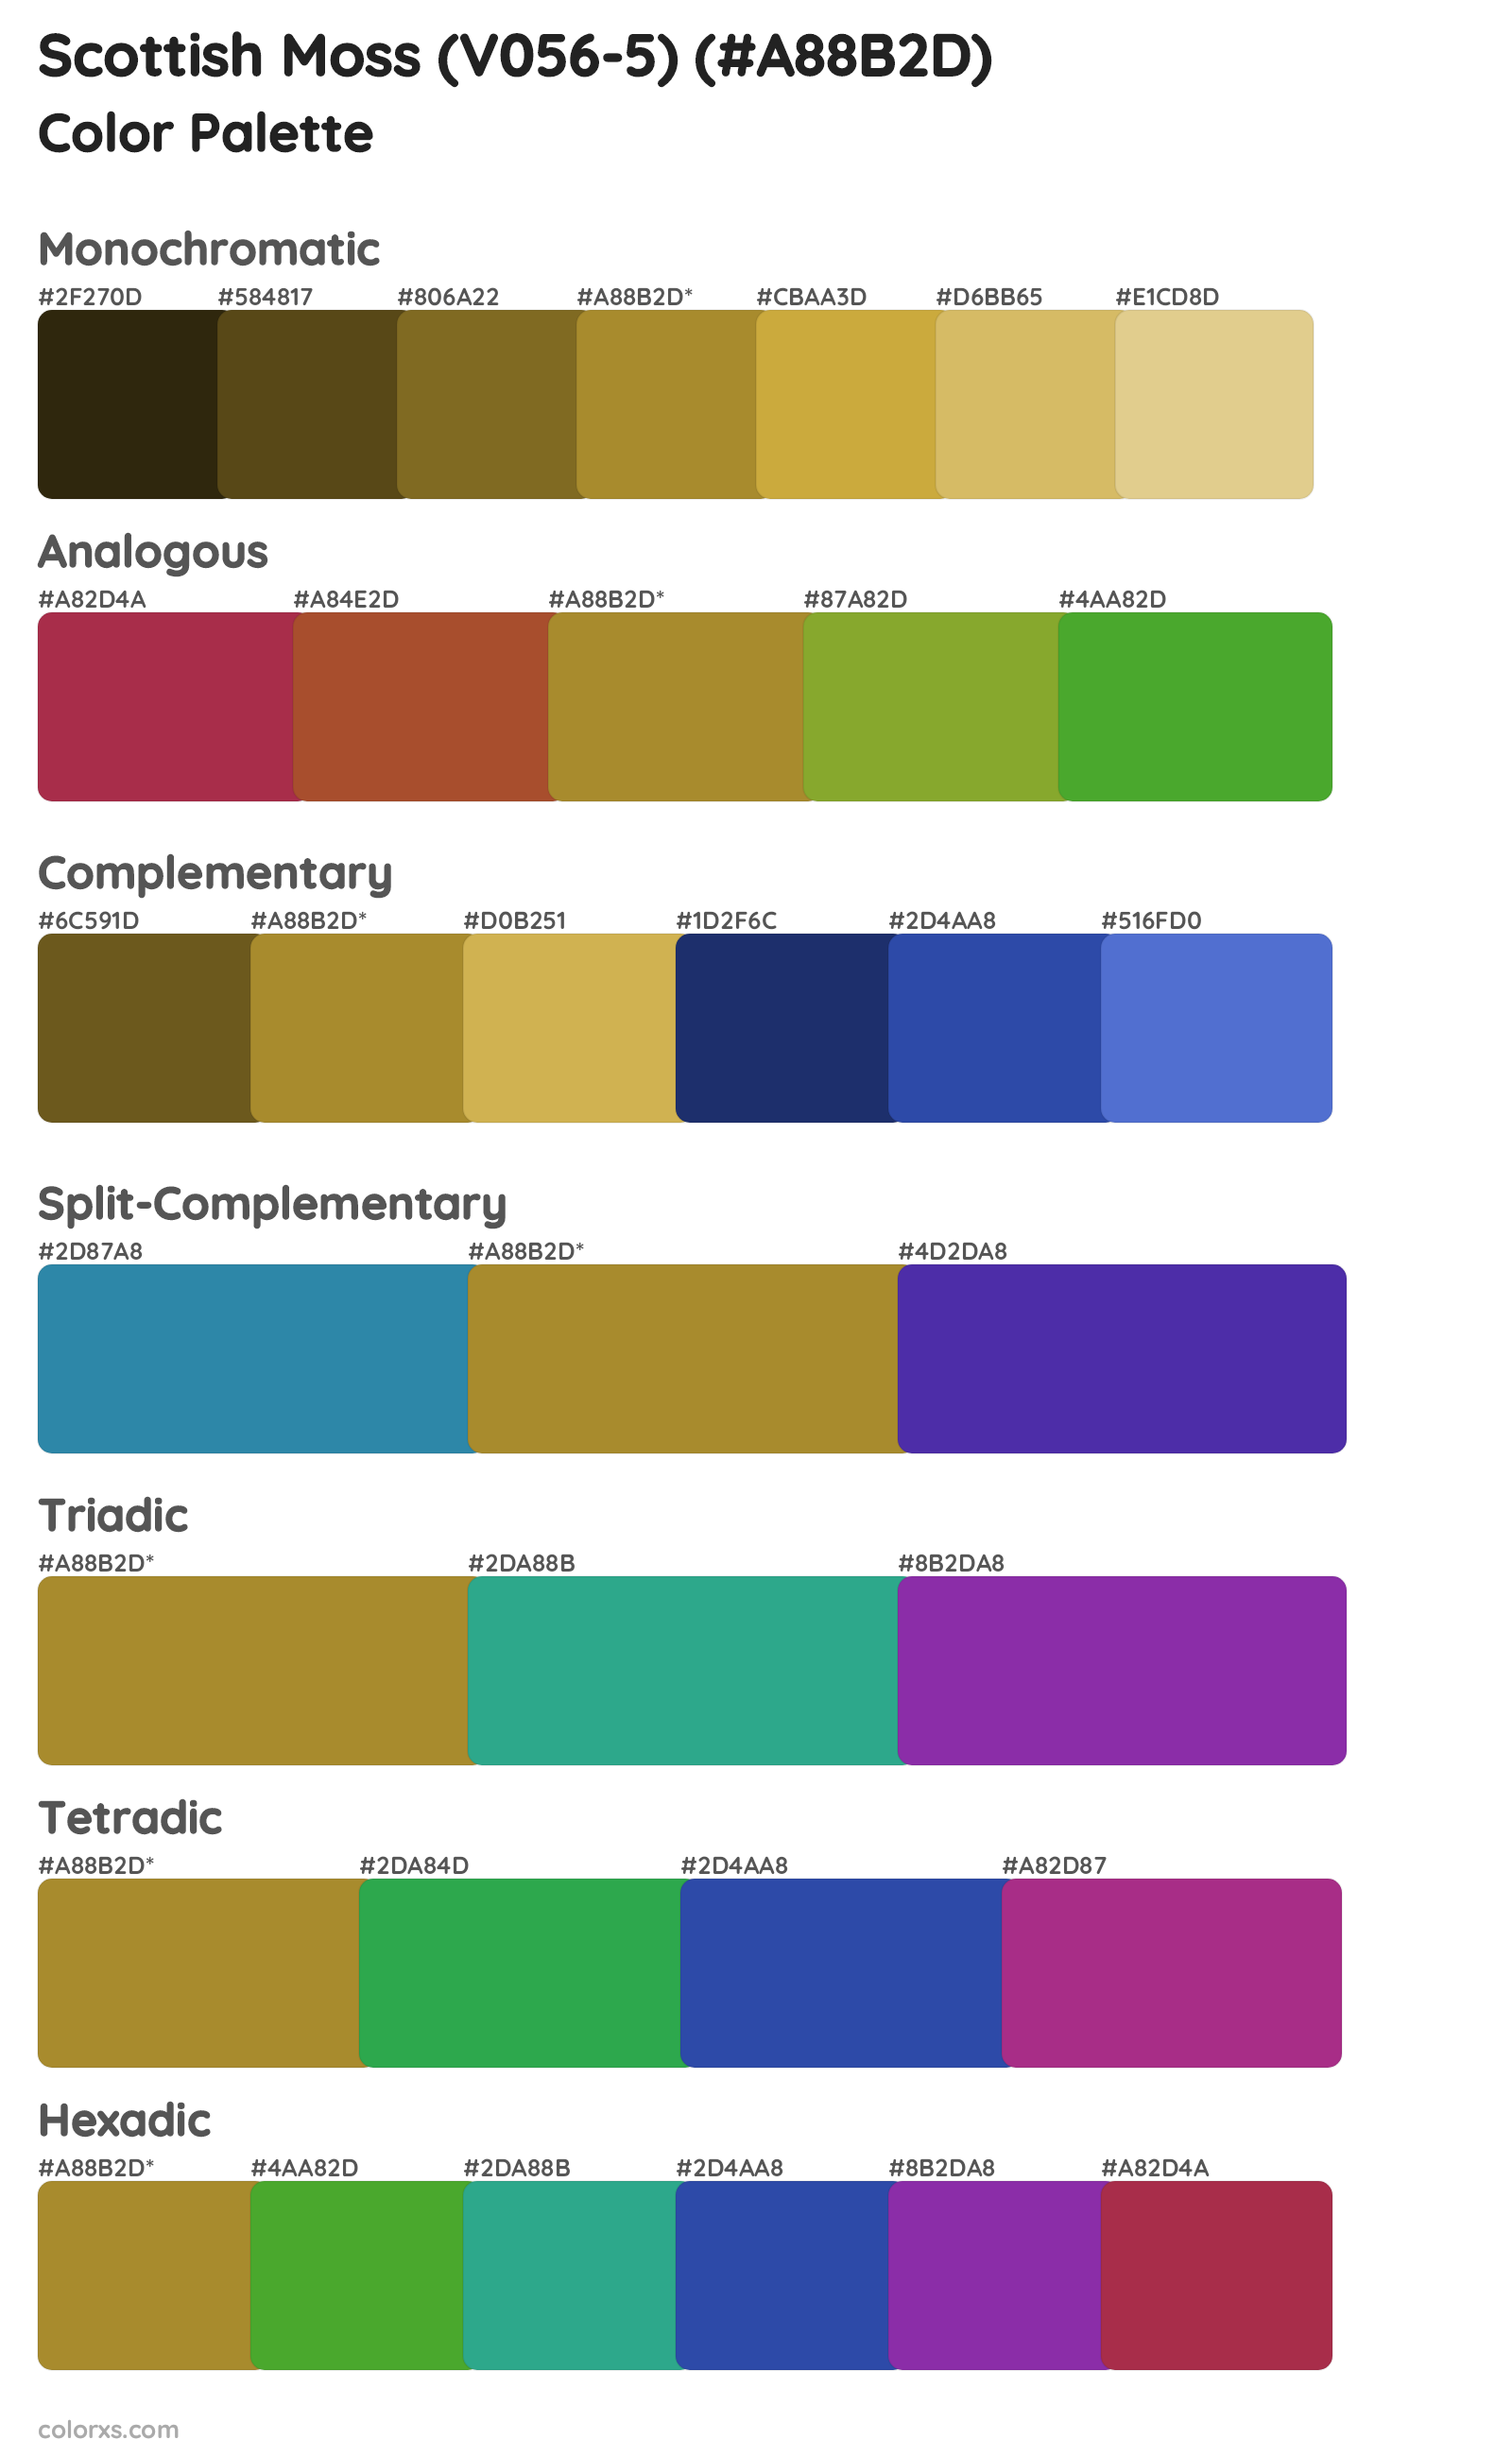 Scottish Moss (V056-5) Color Scheme Palettes